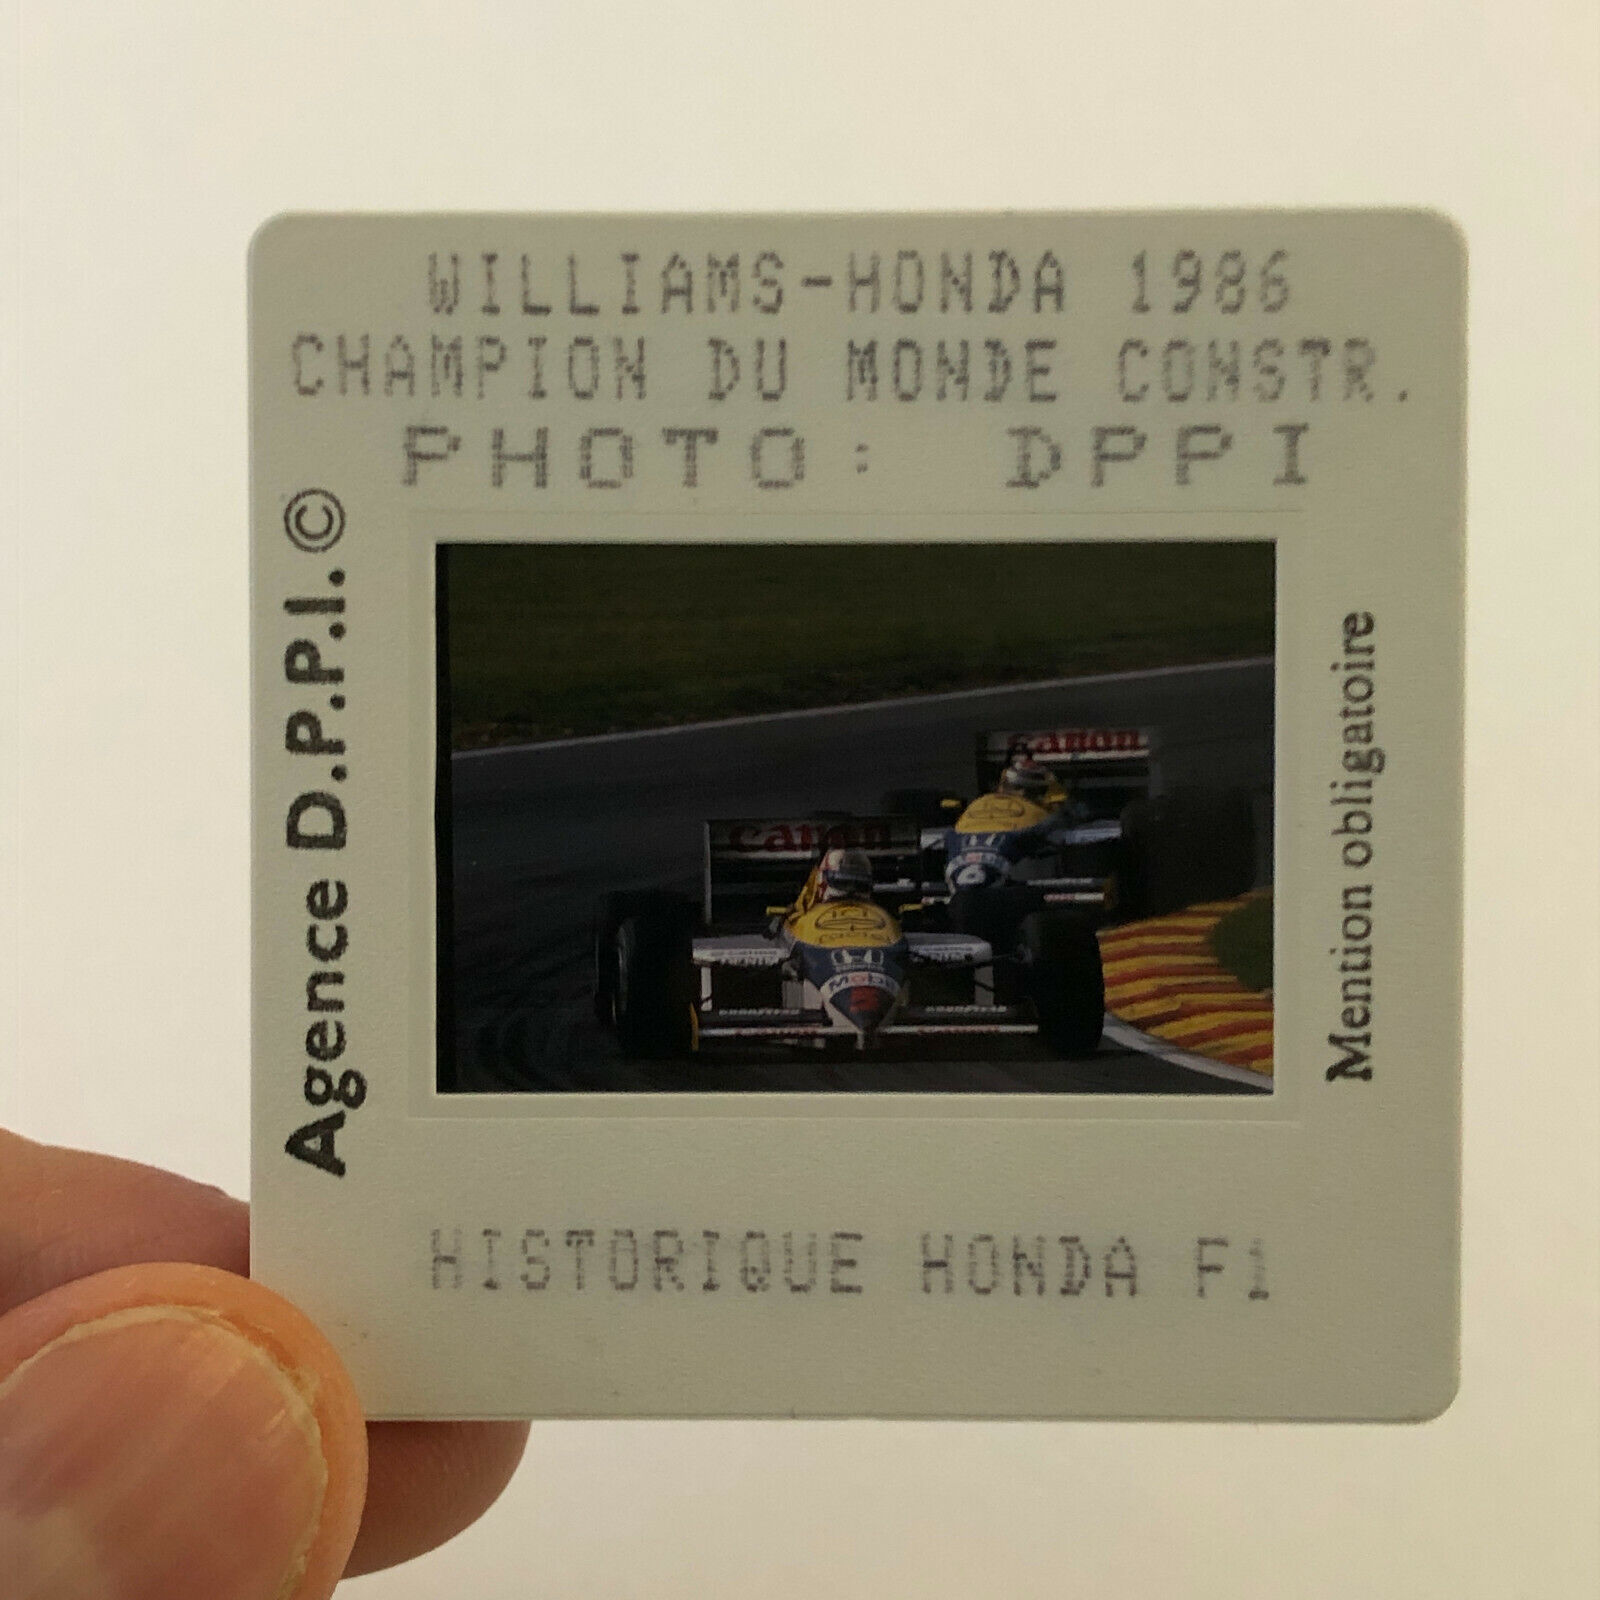 1986 Williams Honda Formula 1 F1 Racing DPPI 35MM Press Photo Slide